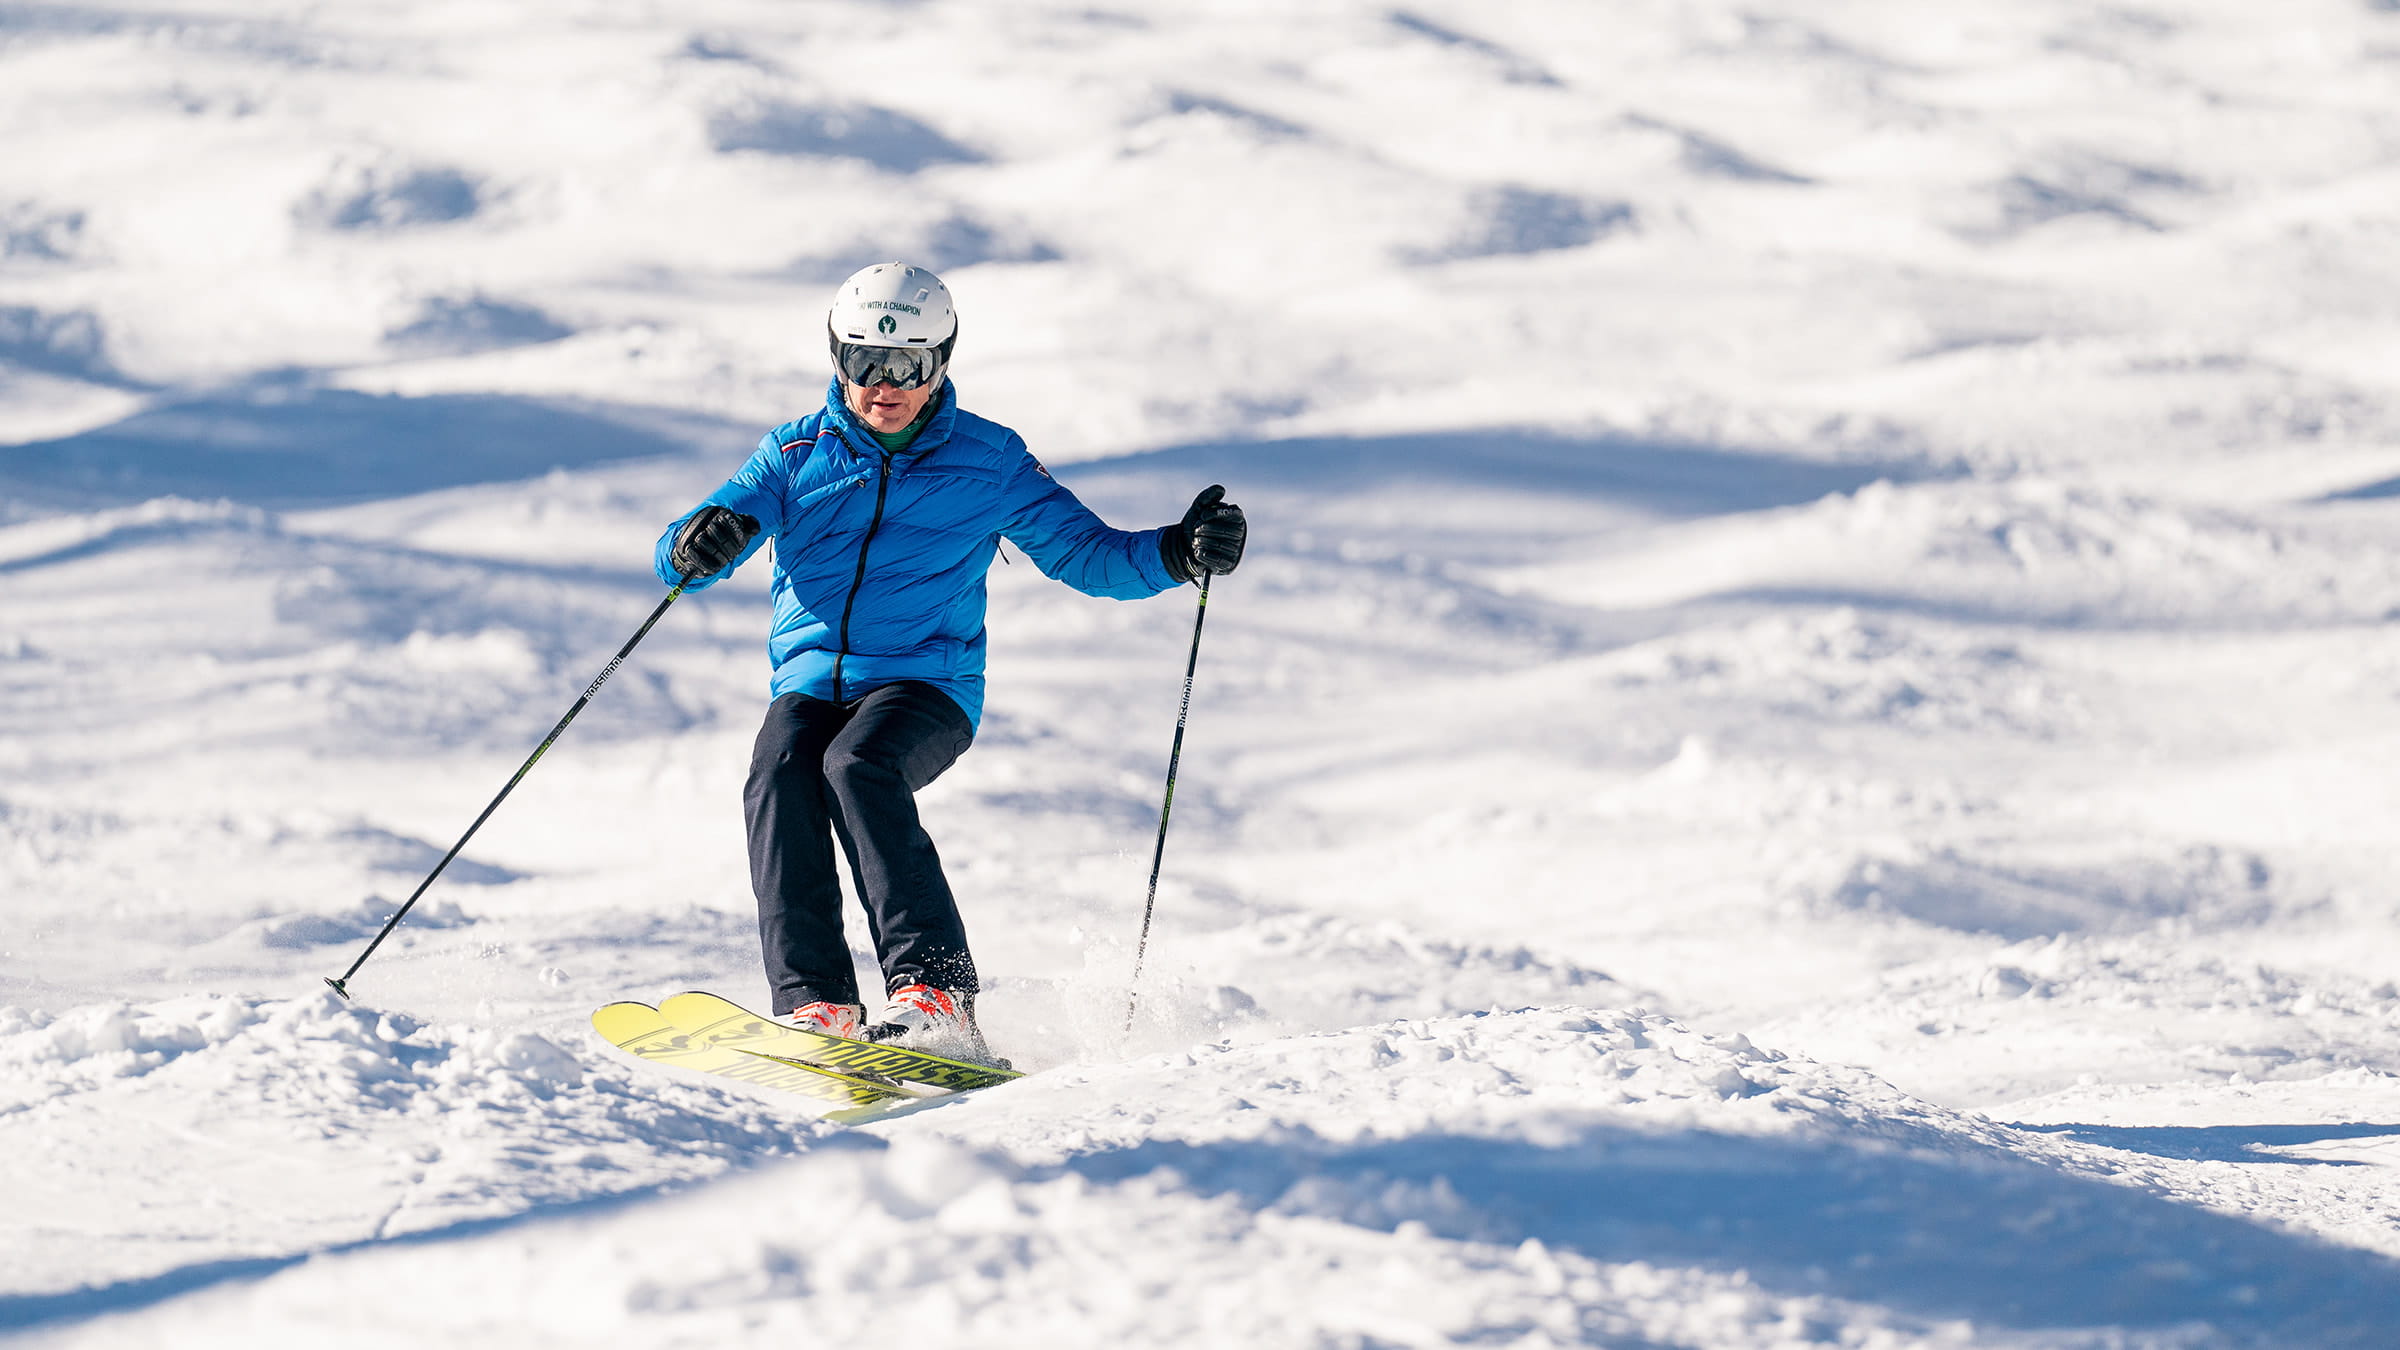 Skier skiing moguls.